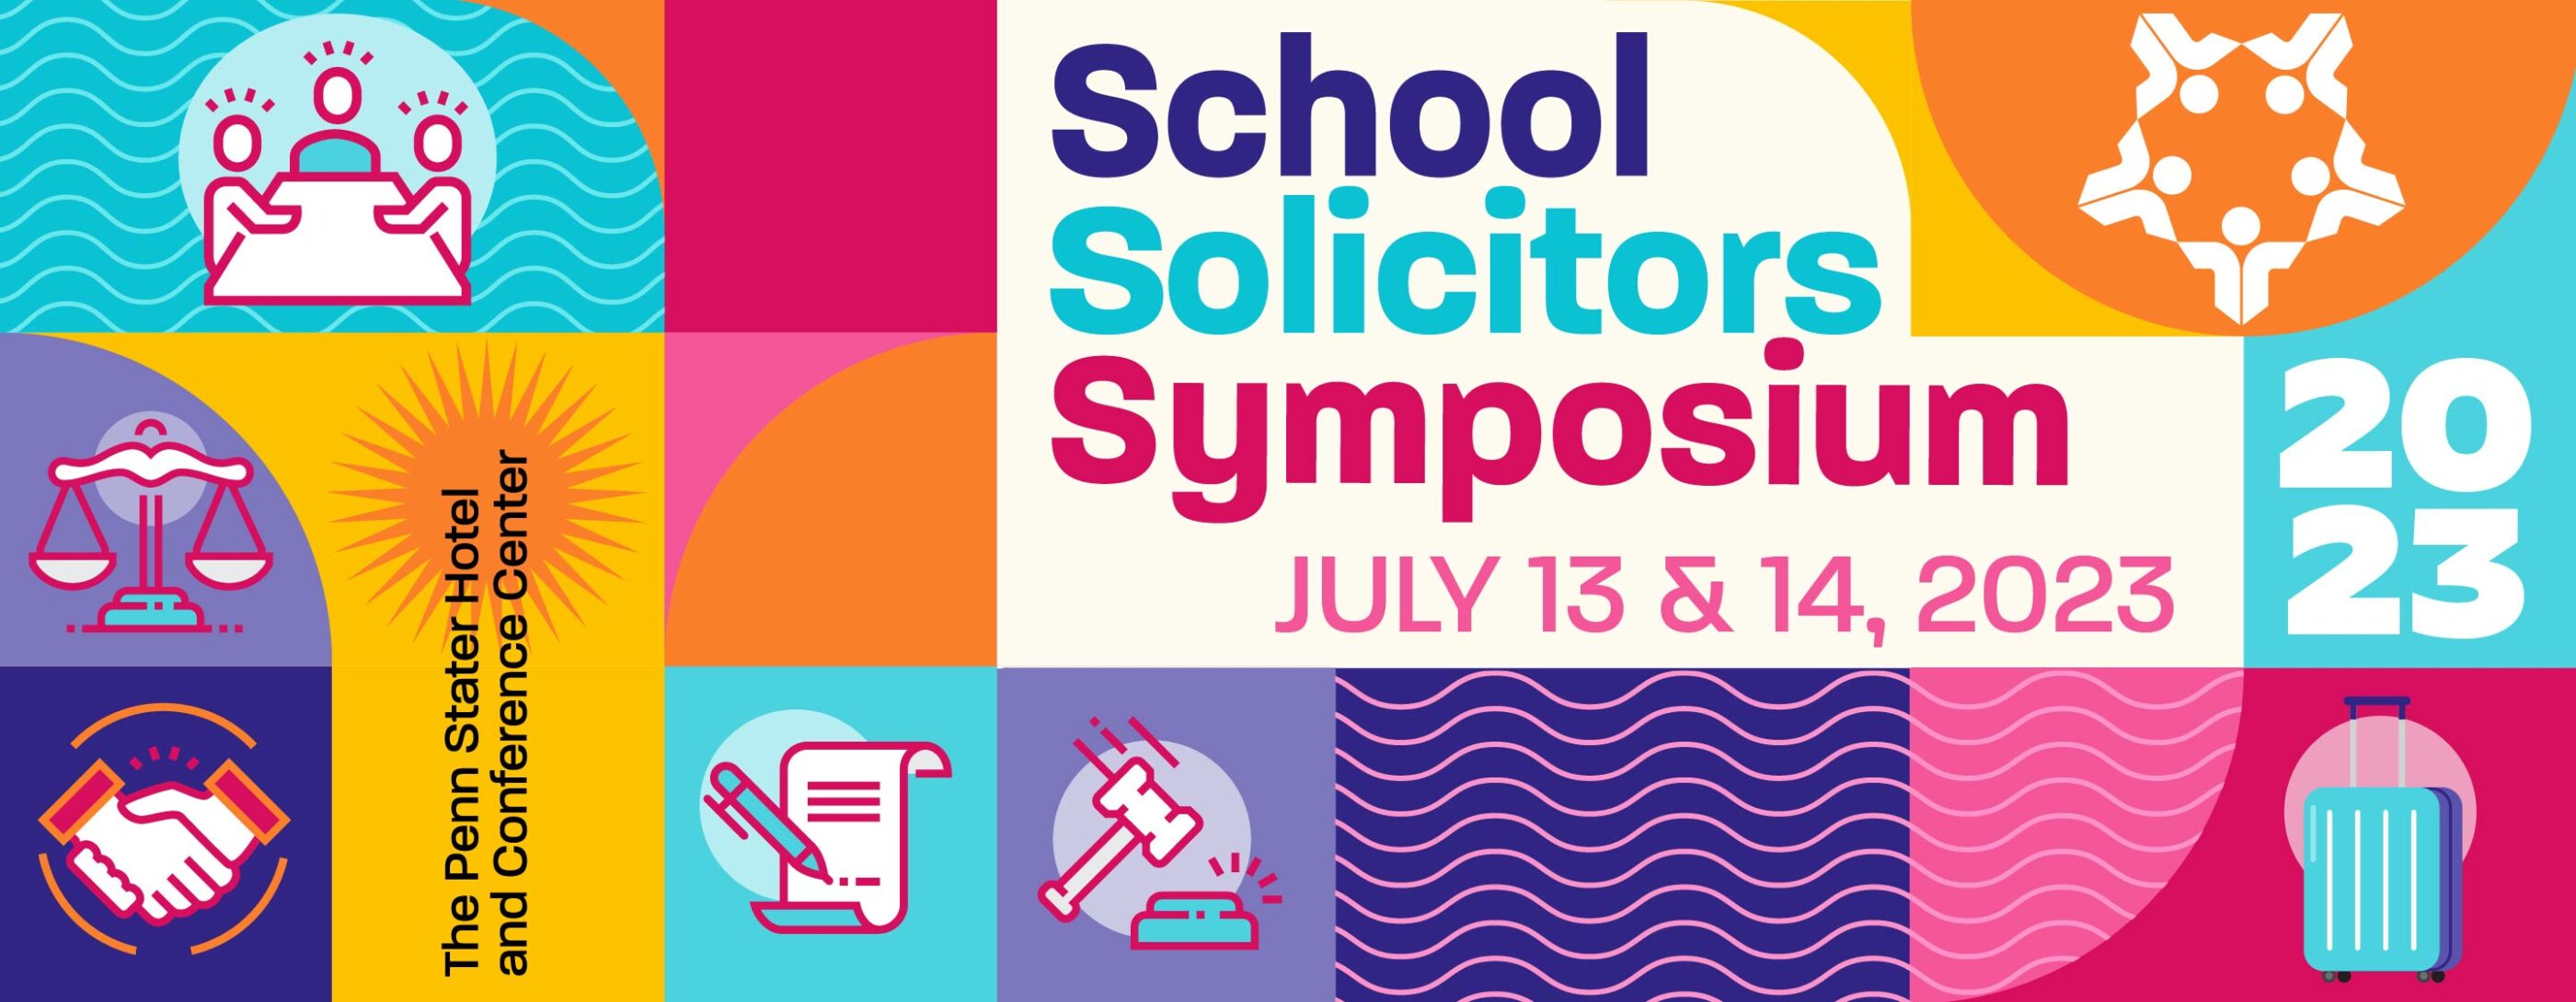 School Solicitors Symposium registration now open!